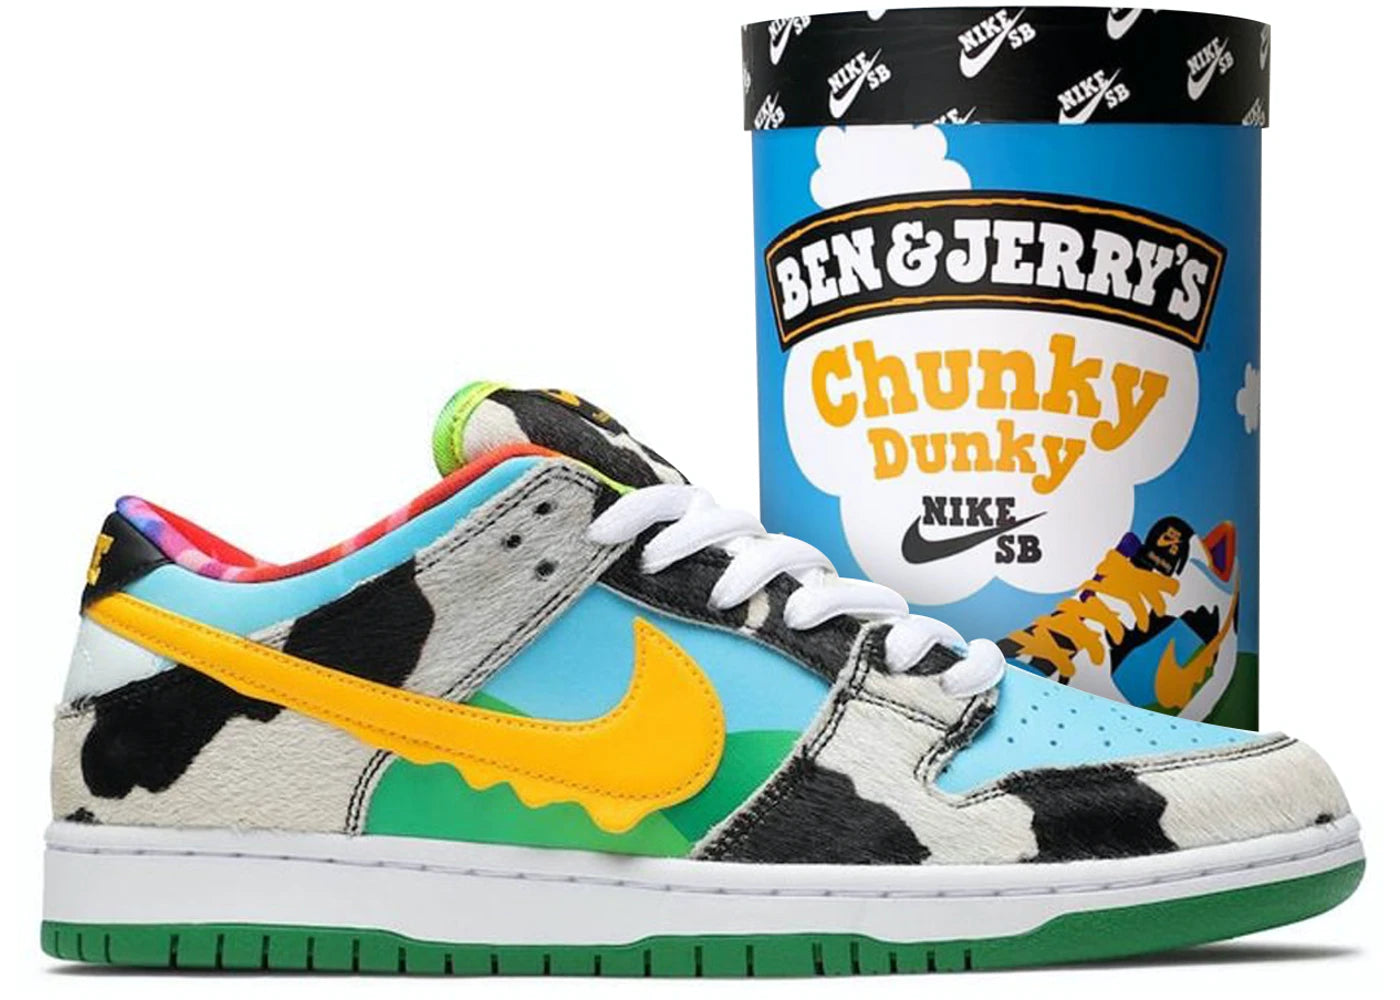 Nike Dunk Low SB "Ben & Jerry's Chunky Dunky" (F&F Box)